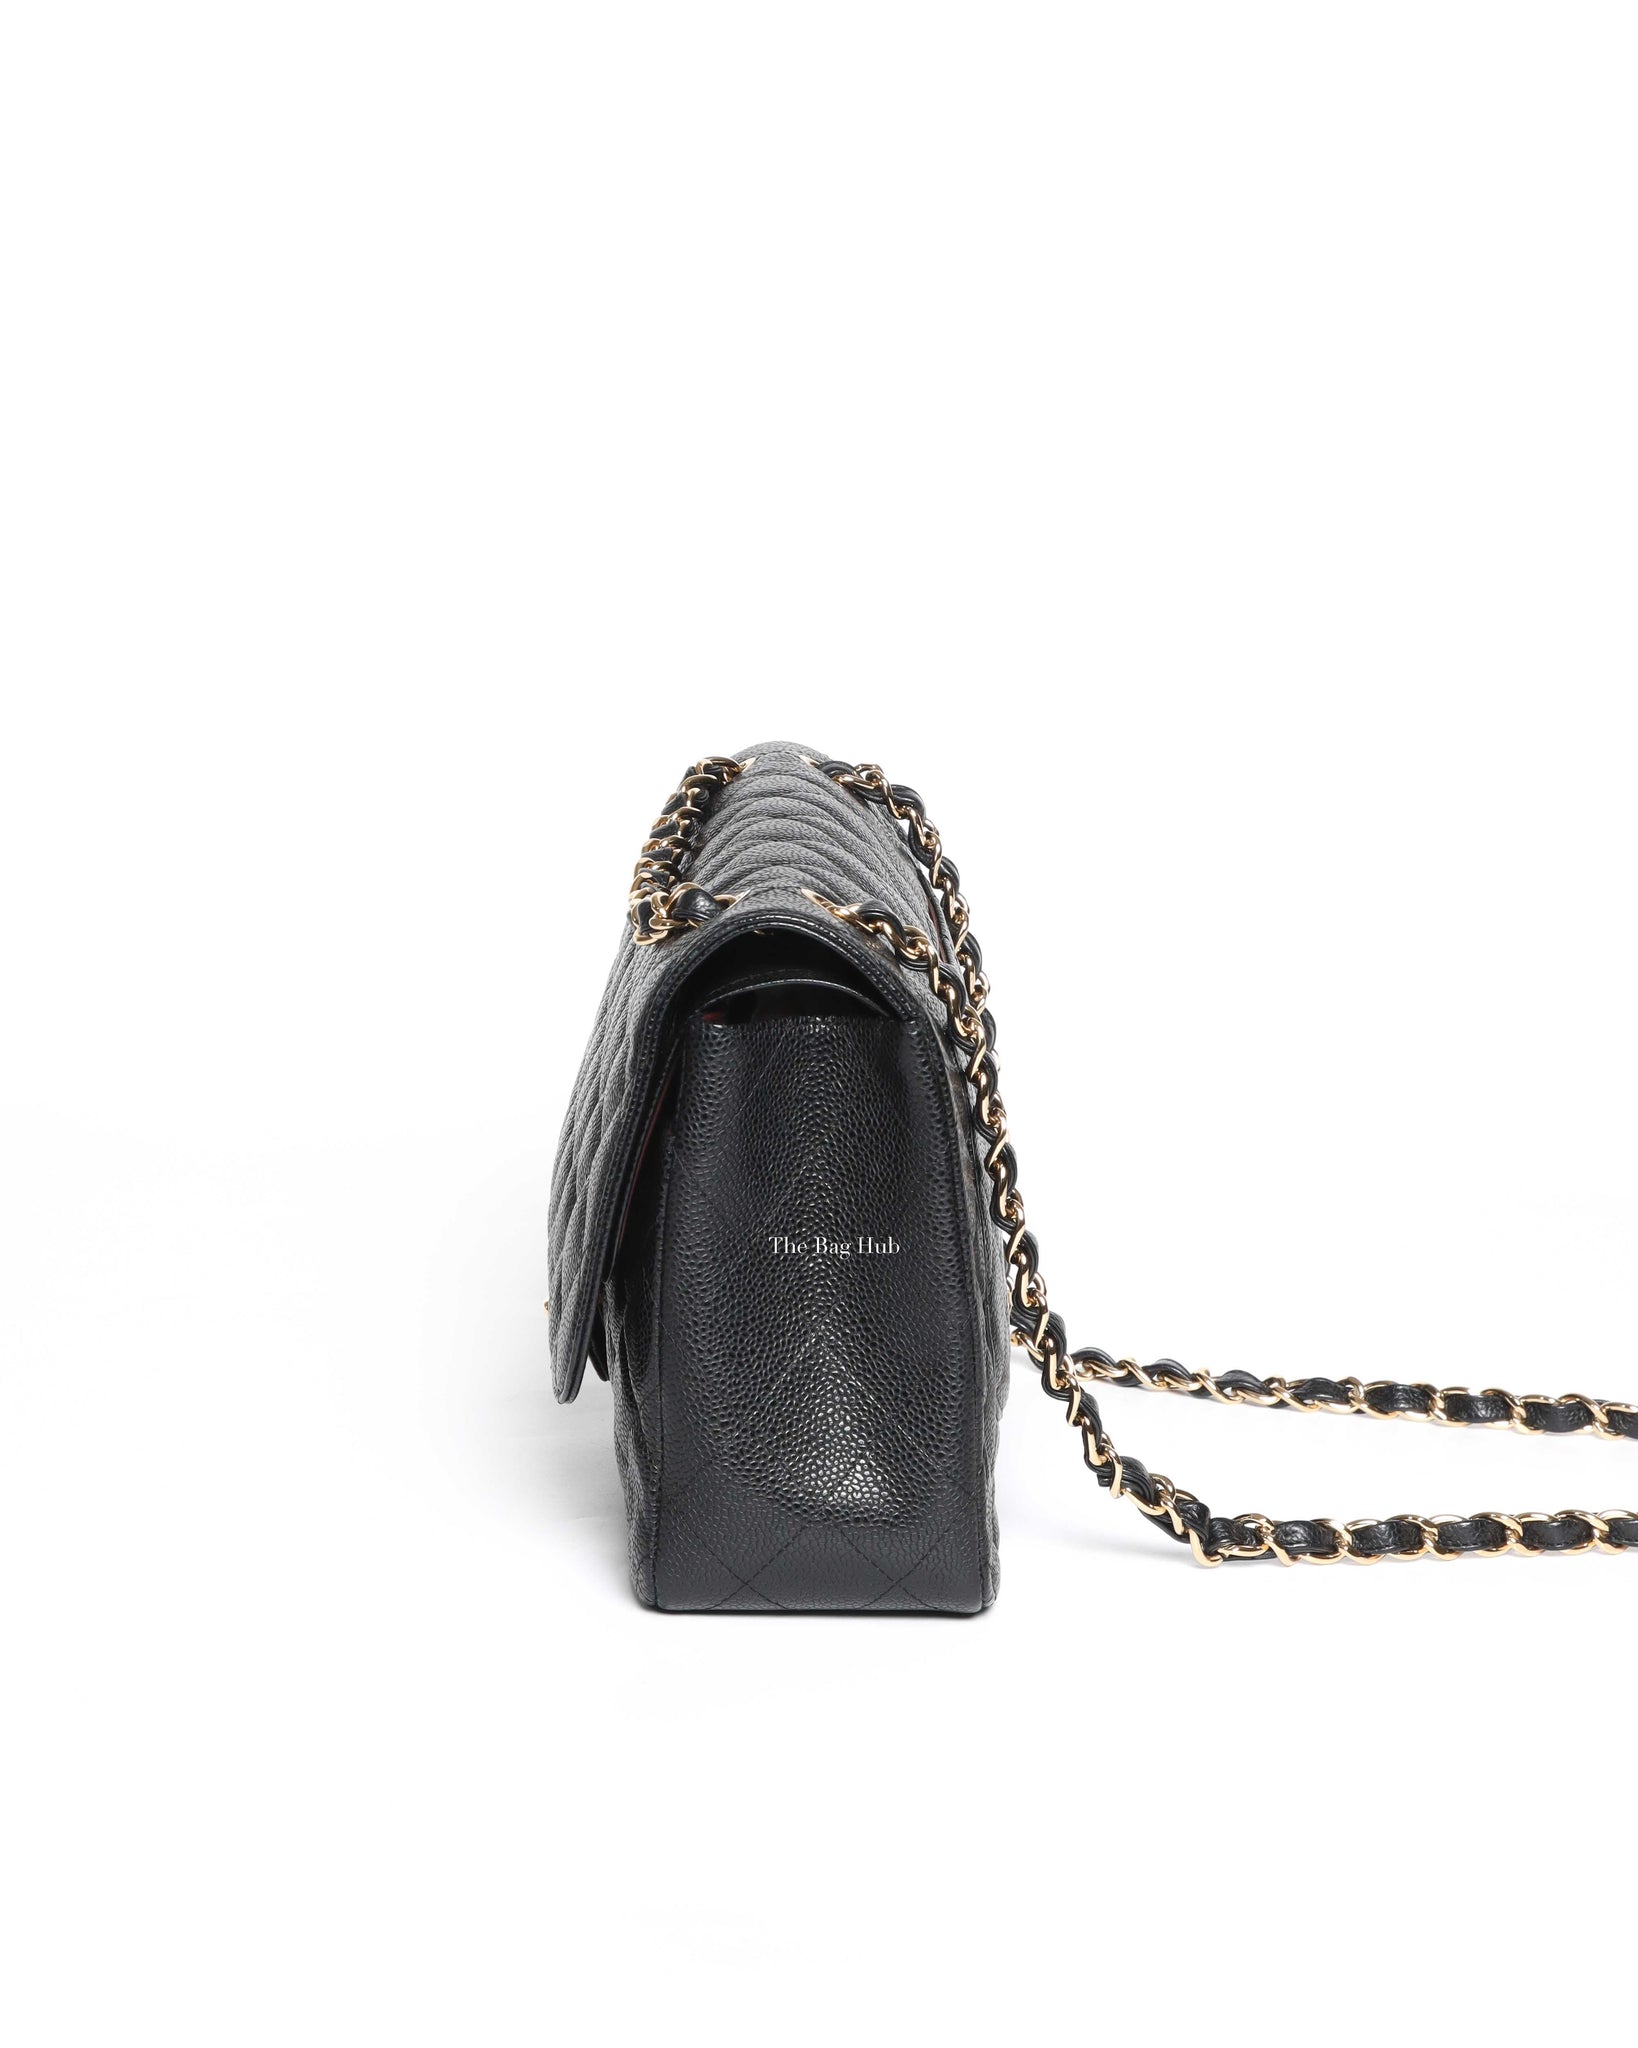 Chanel Black Caviar Jumbo Classic Double Flap Bag GHW - 5